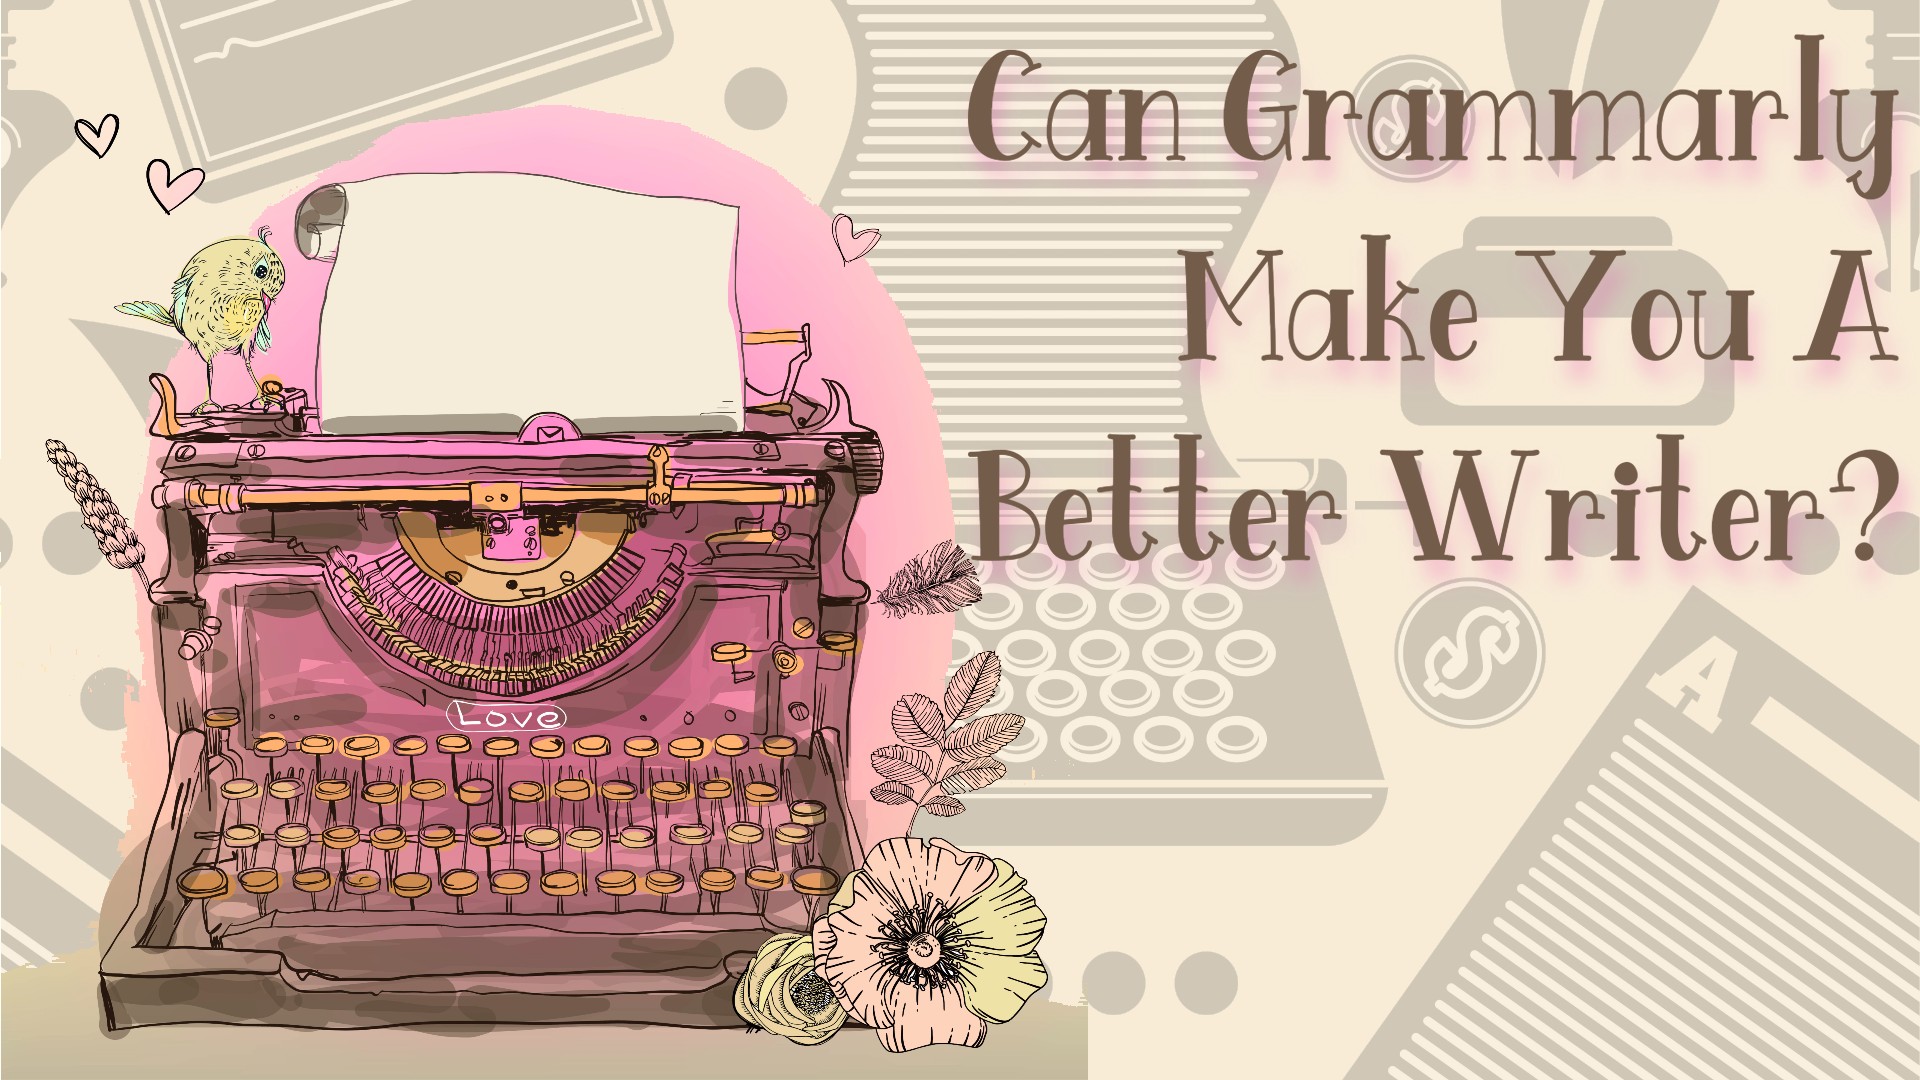 Can Grammarly Make You a Better Writer?